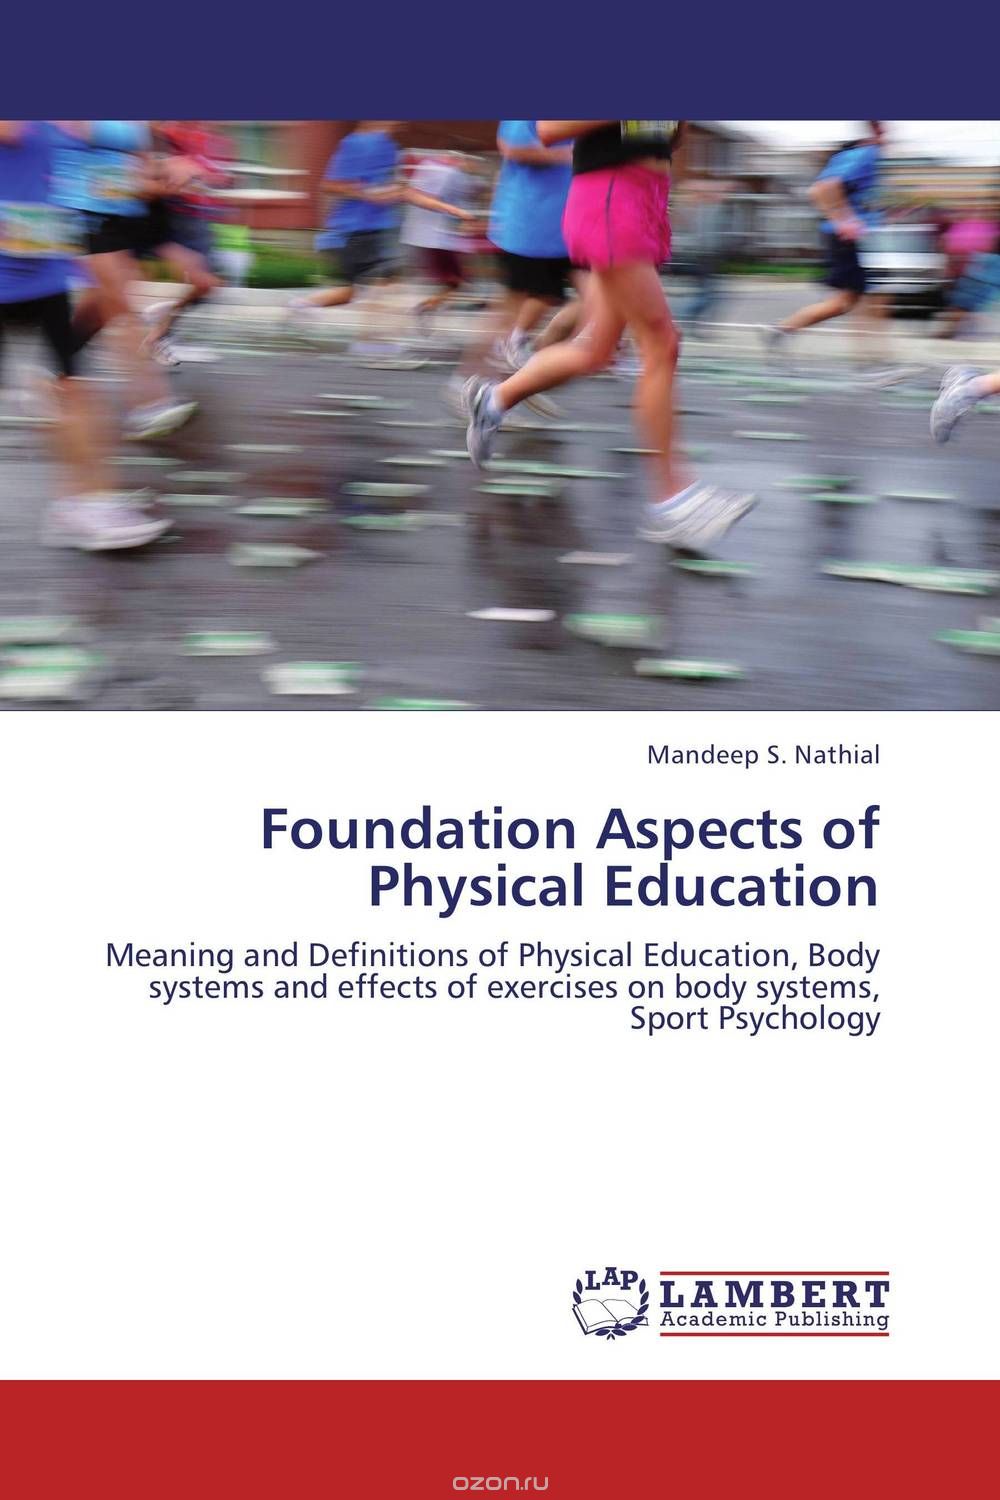 Скачать книгу "Foundation Aspects of Physical Education"